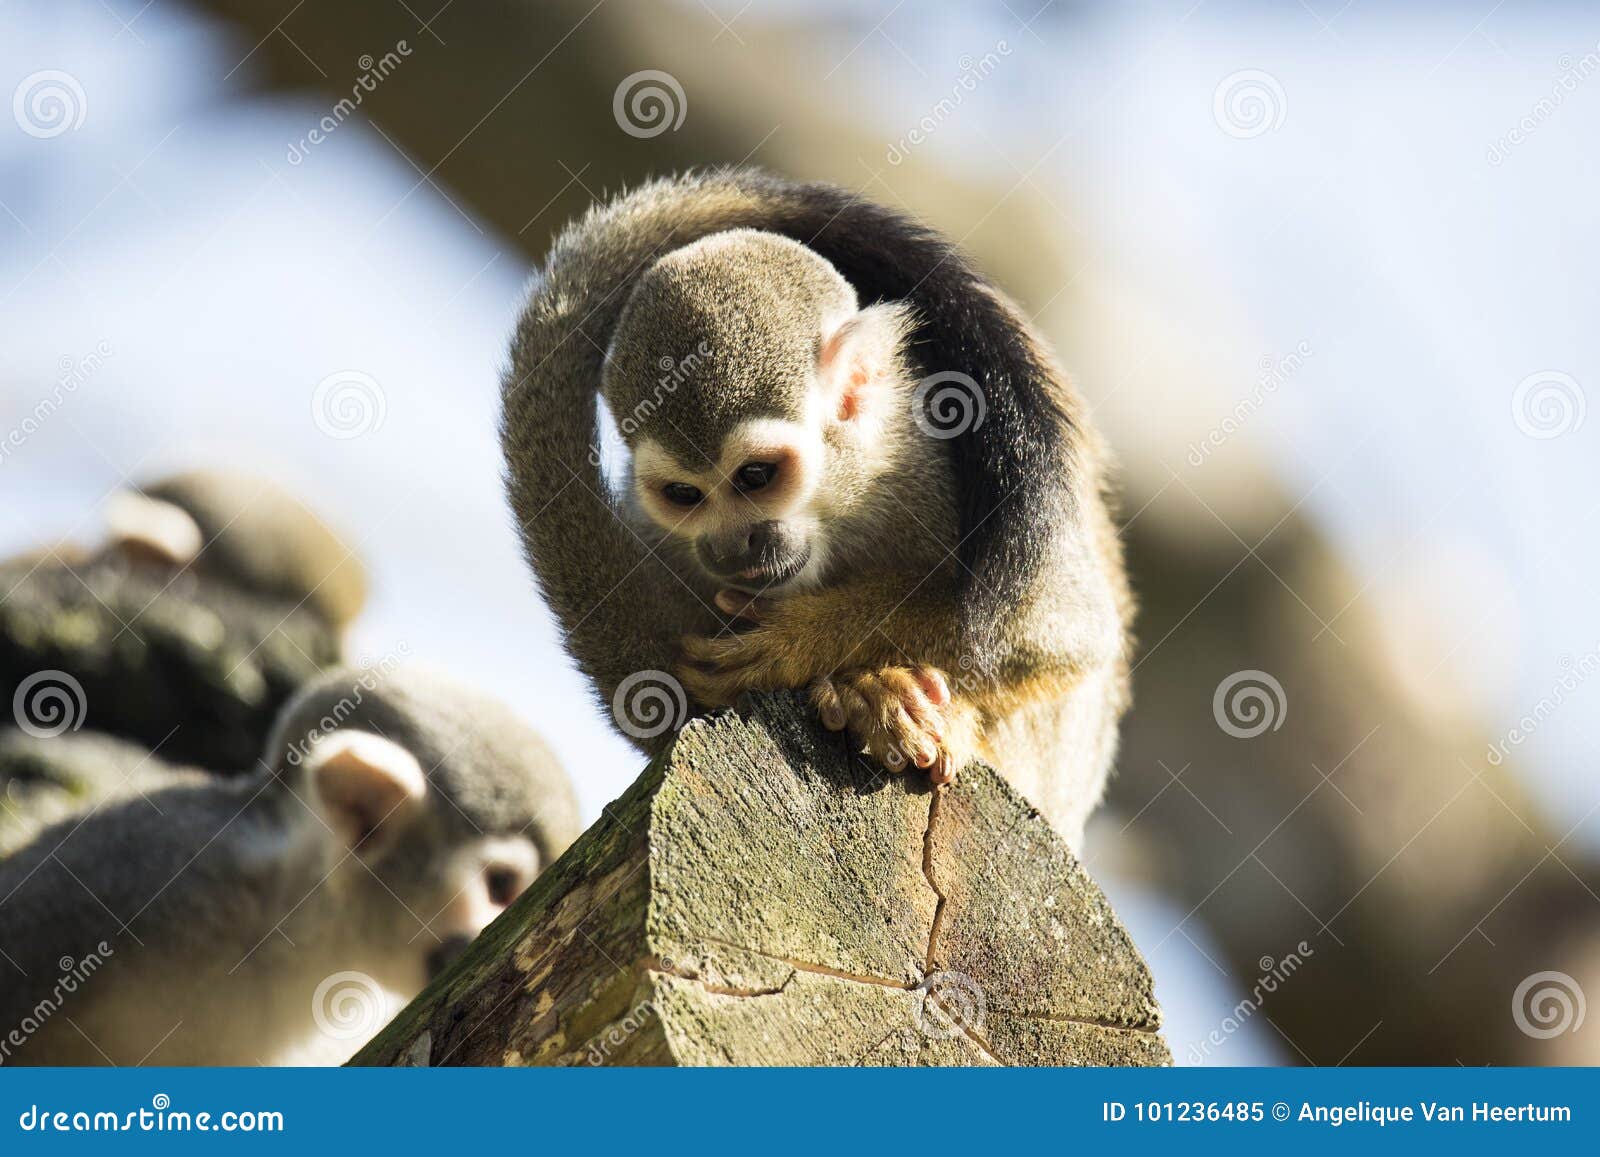 squirrel monkey sitting on treetrunk